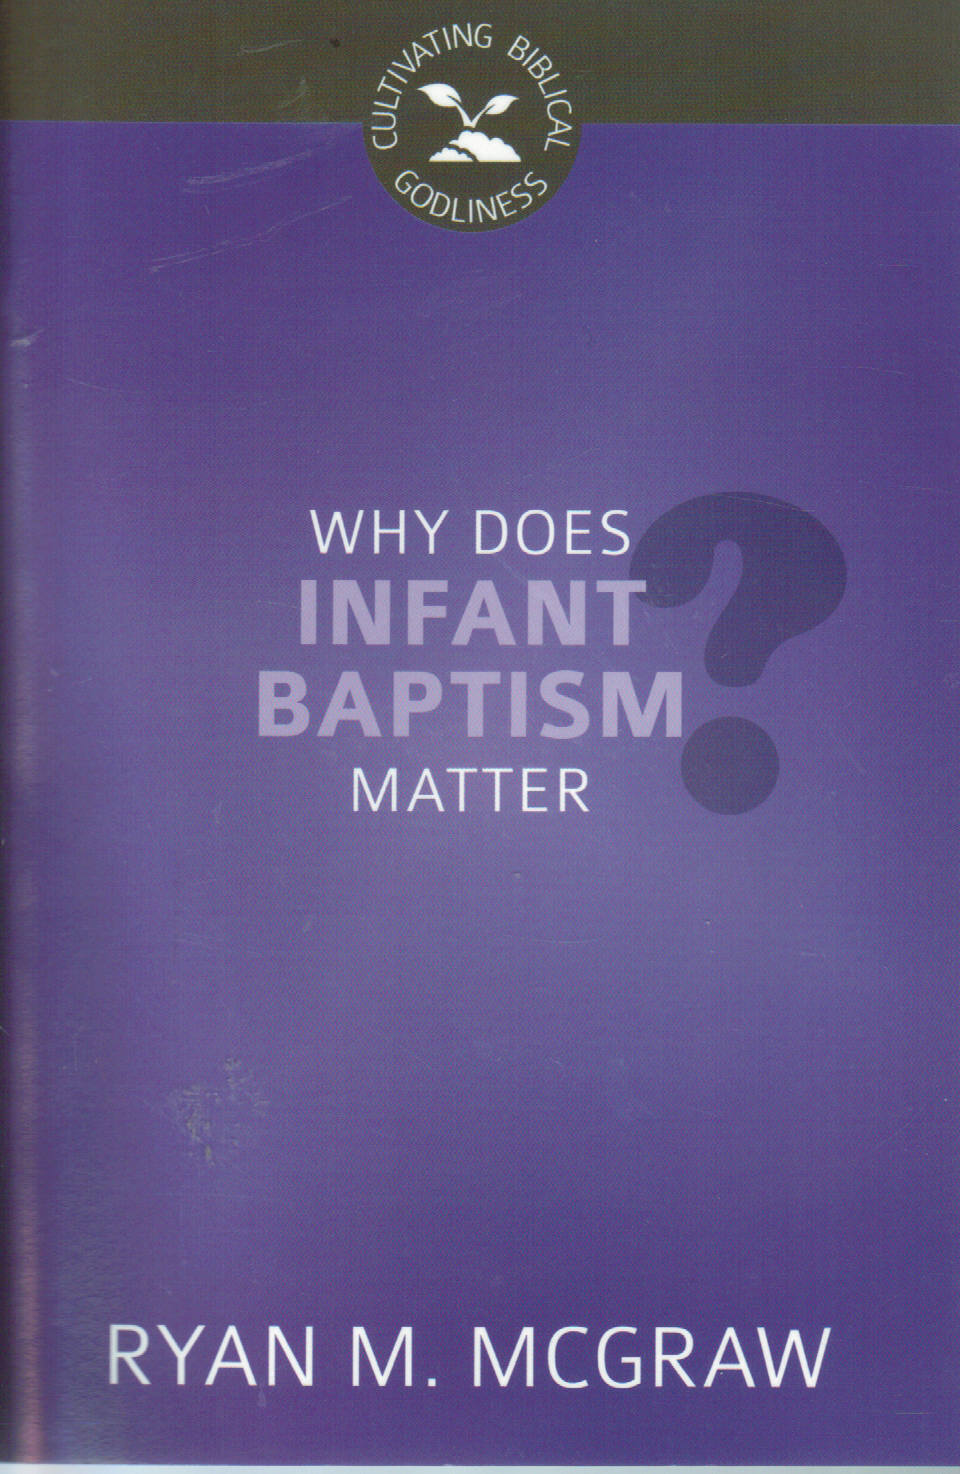 Cultivating Biblical Godliness - Why Does Infant Baptism Matter?